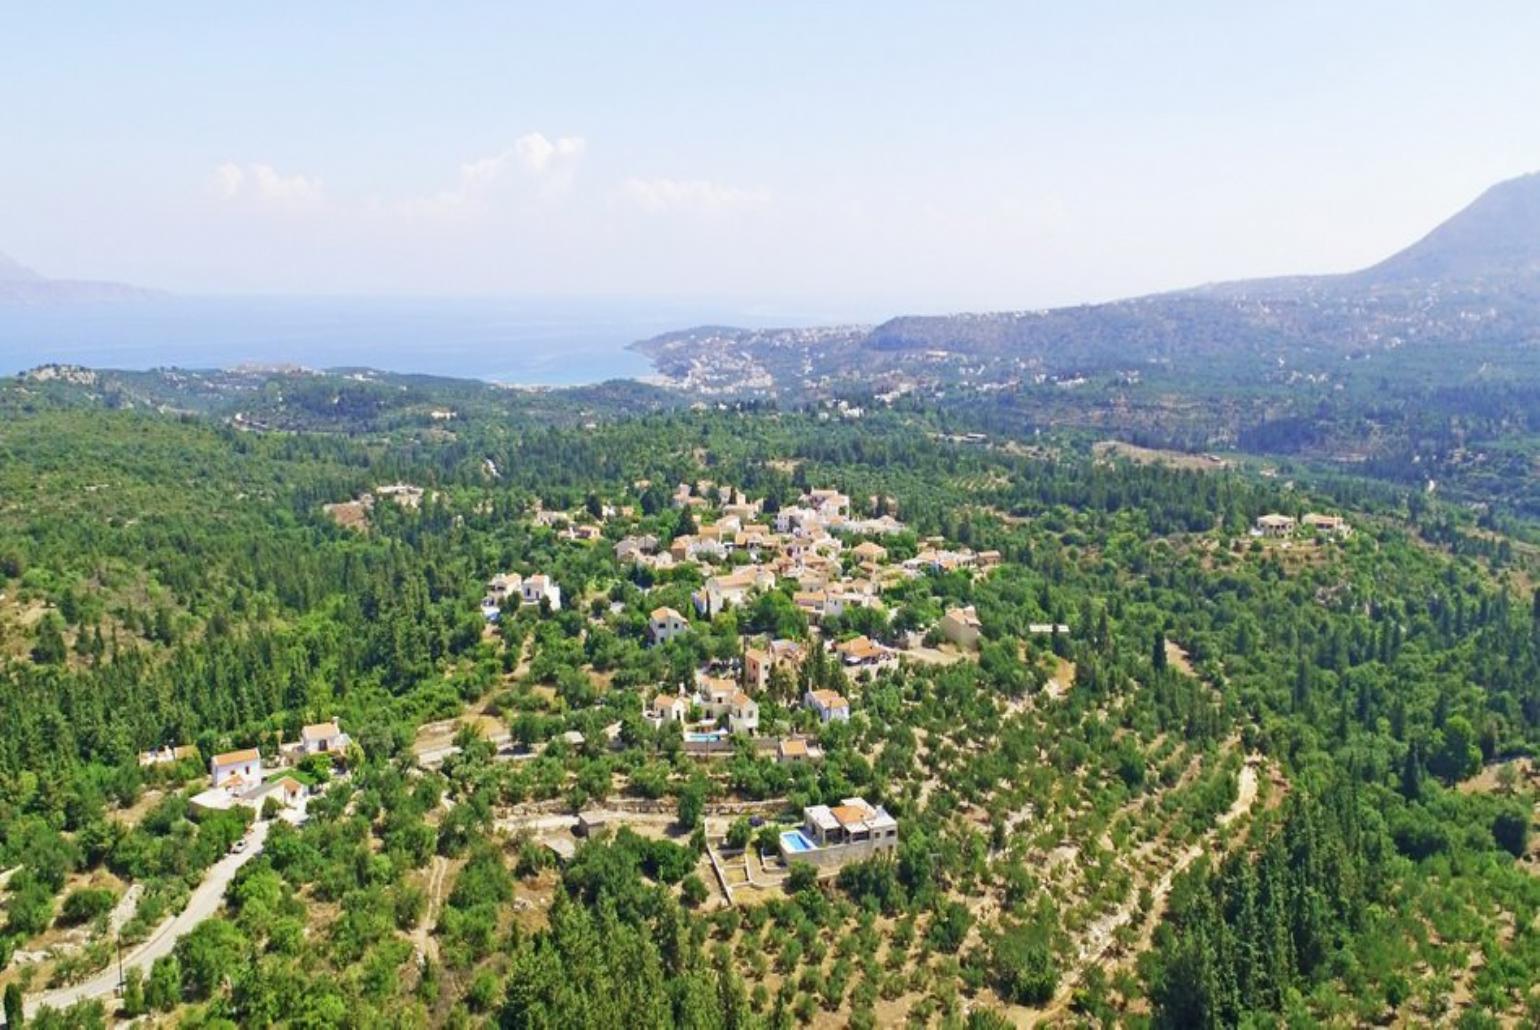 Aerial view of Villa